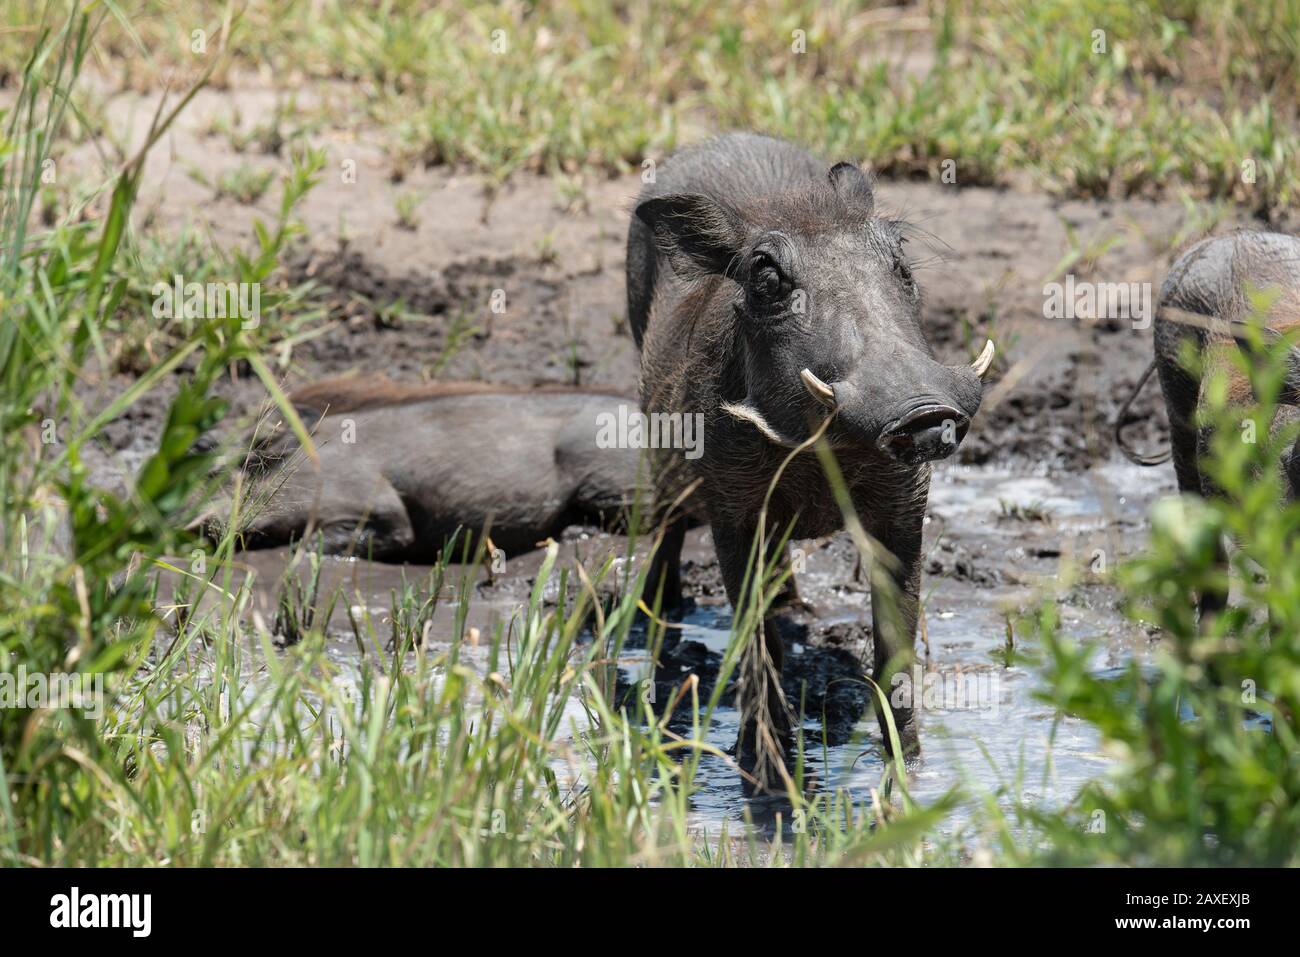 Warthog enjoying his mud bath. Taken on safari in Tarangire National Park, Tanzania, Africa. Stock Photo